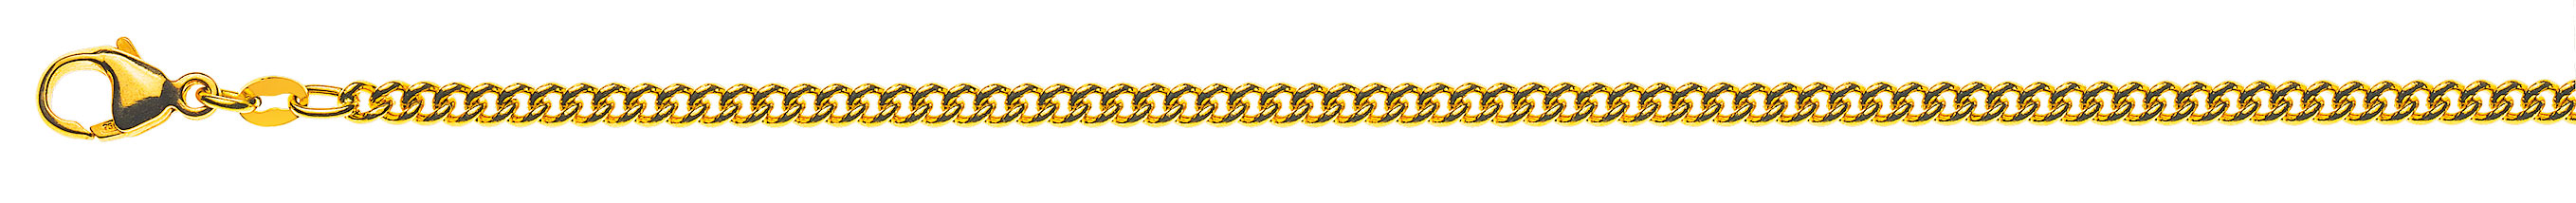 AURONOS Prestige Necklace yellow gold 18K round curb chain 50cm 2.8mm